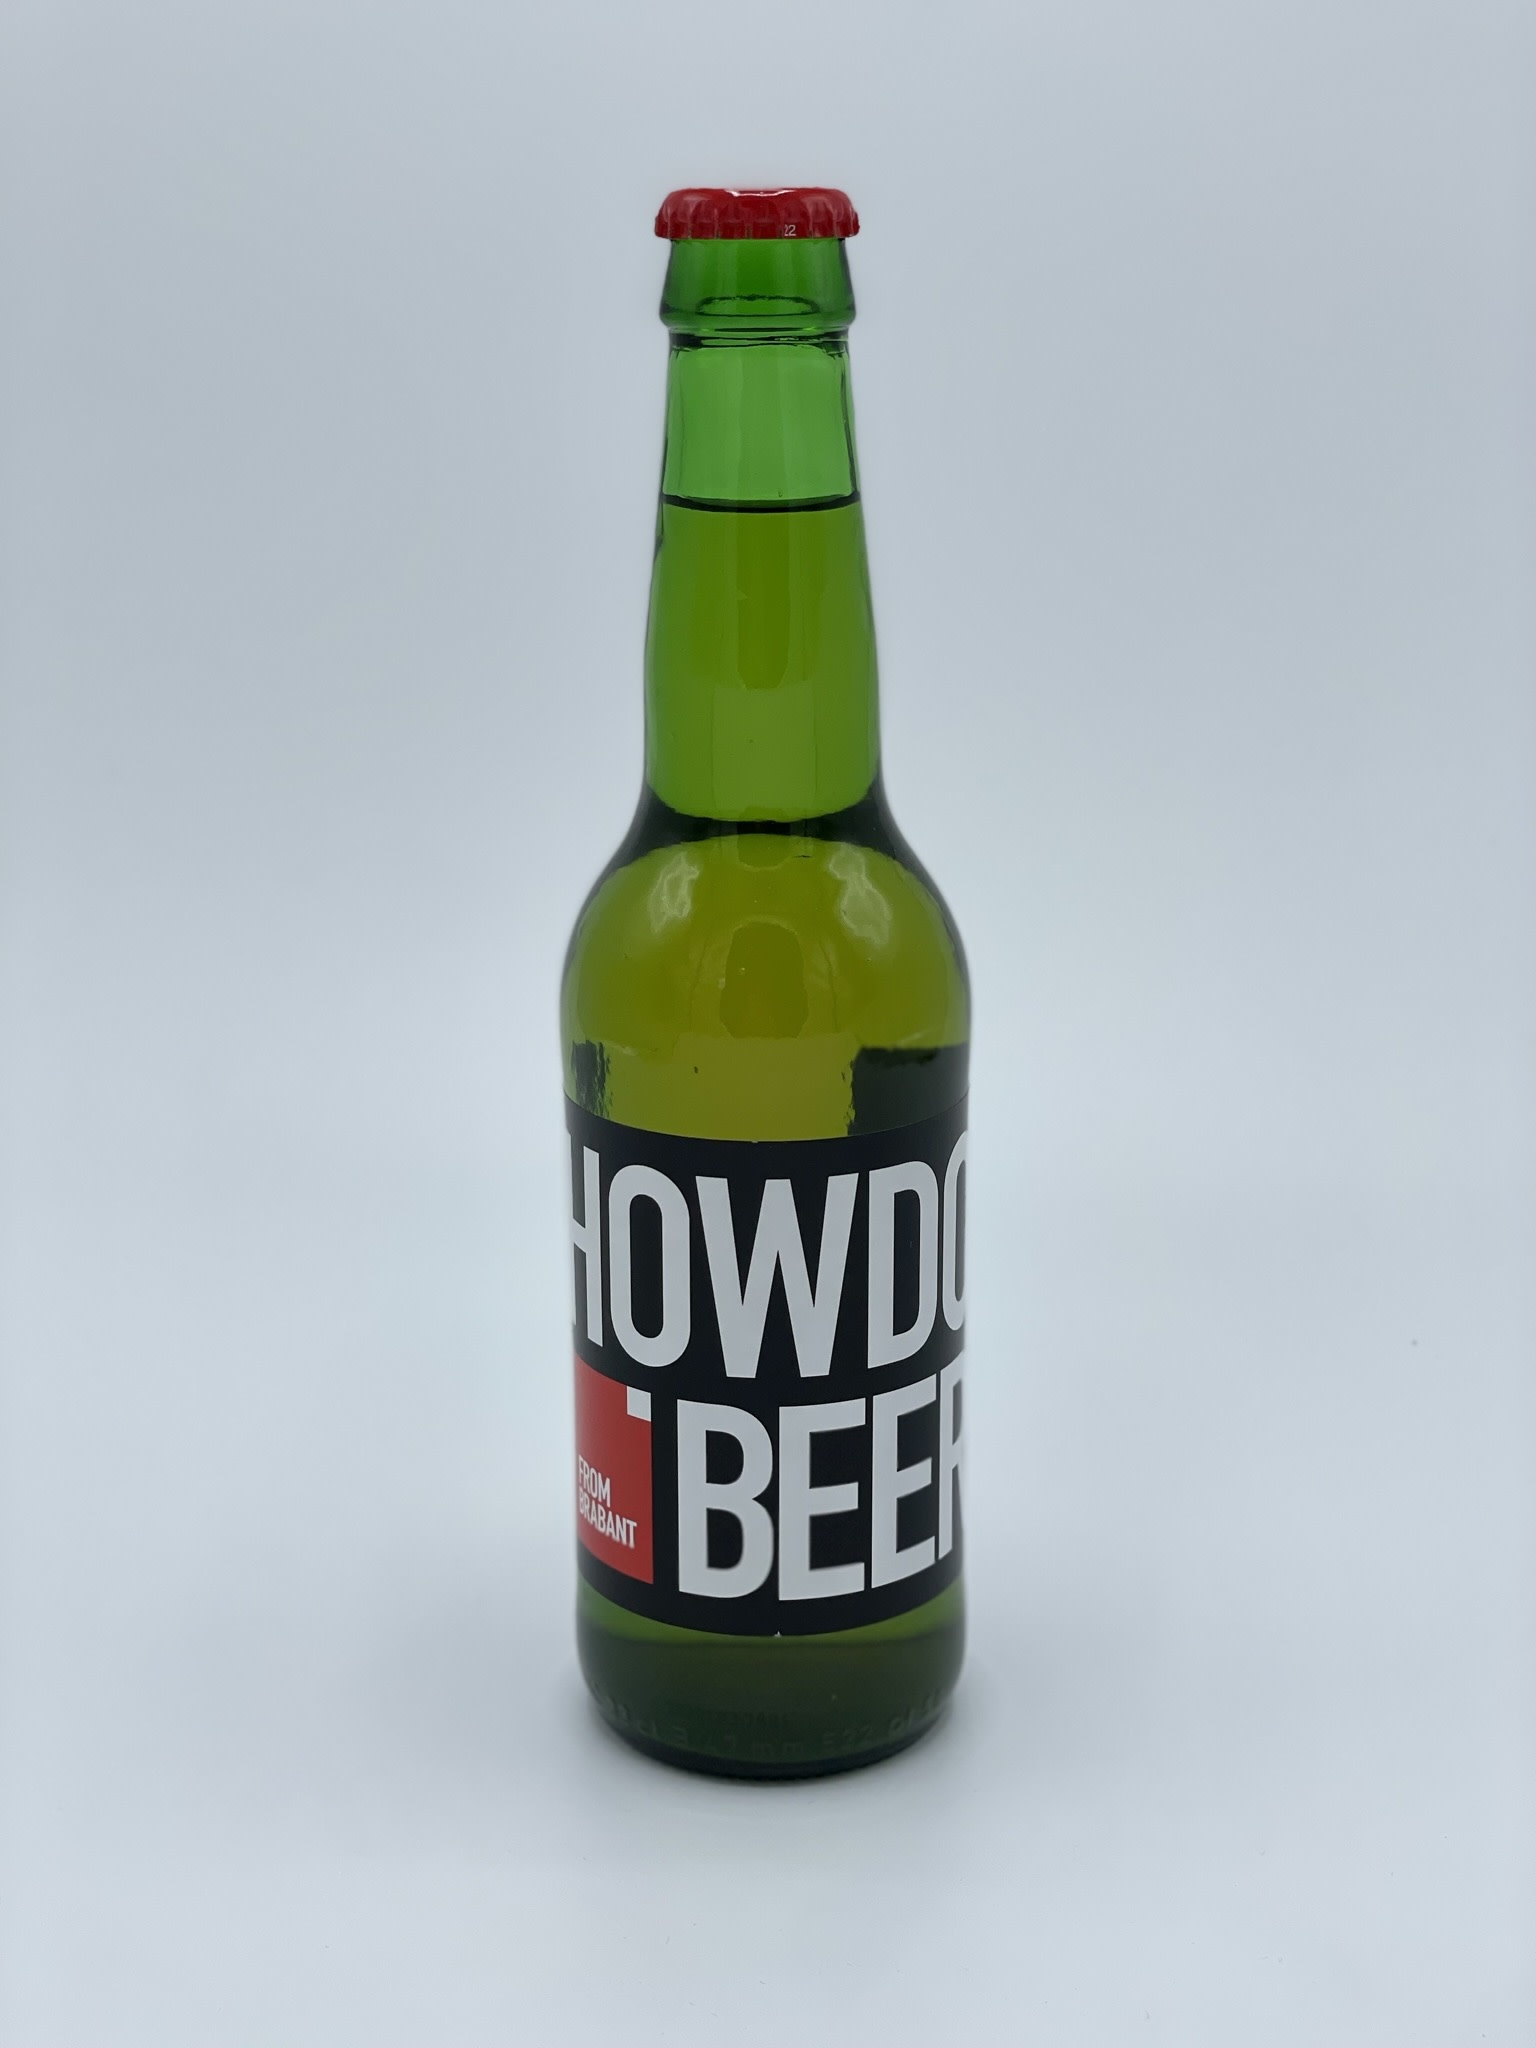 Howdo Beer - From Brabant-1